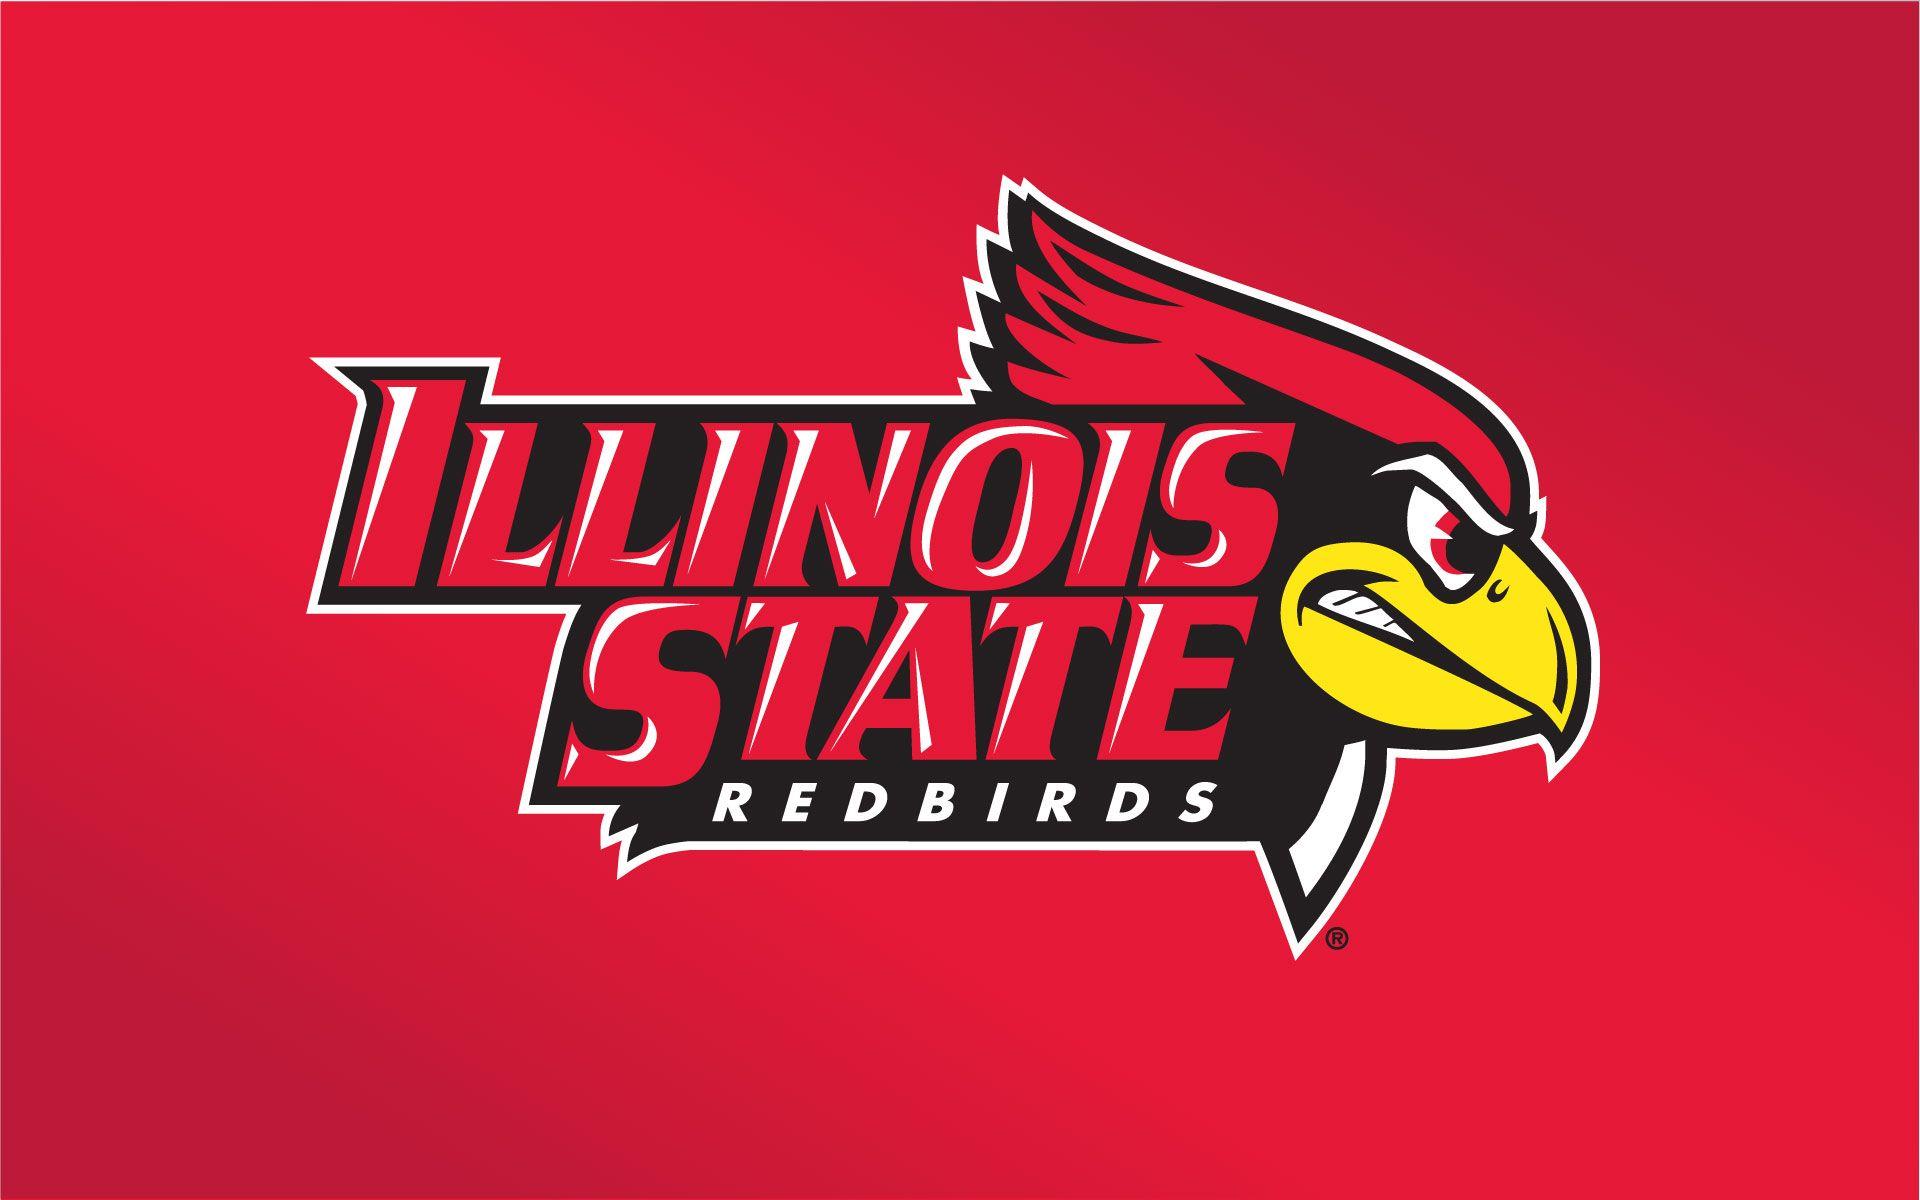 ISU Redbird Logo - Illinois state university Logos